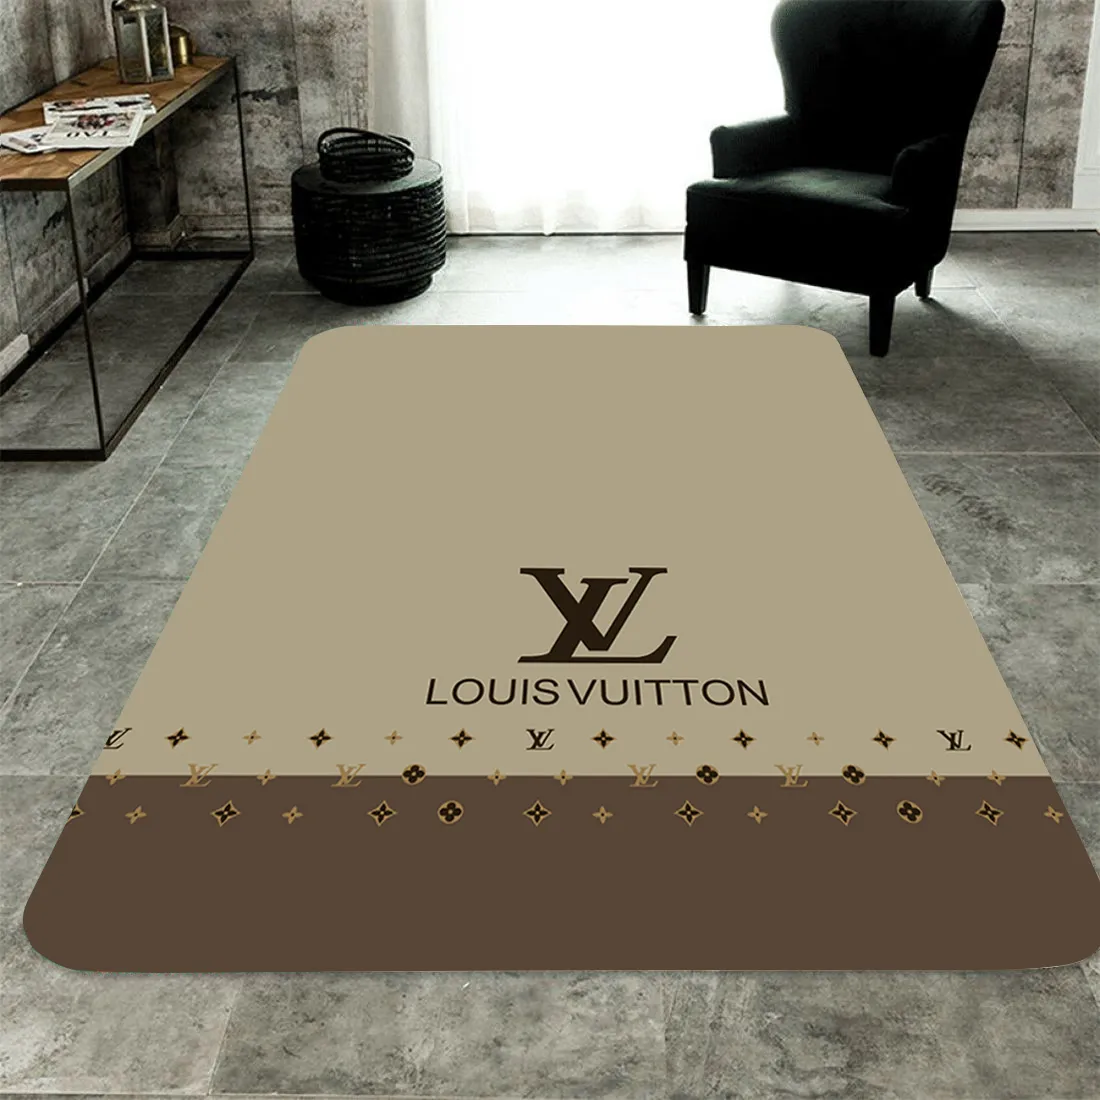 Louis Vuitton Light Grey Rectangle Rug Area Carpet Fashion Brand Luxury Home Decor Door Mat